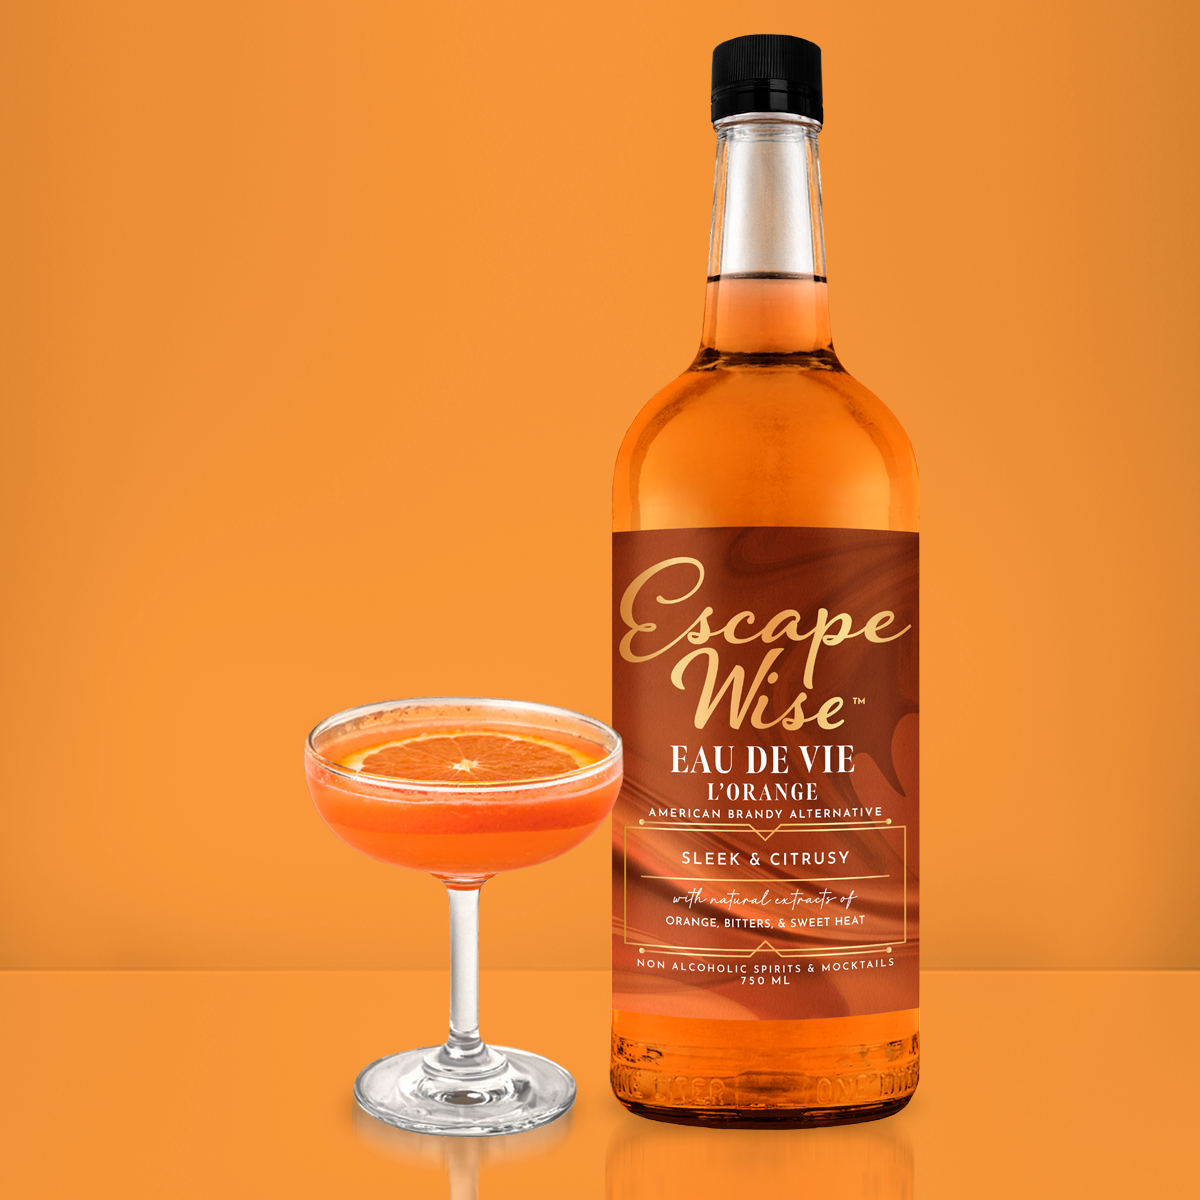 Eau de Vie L'orange - American Brandy Alternative